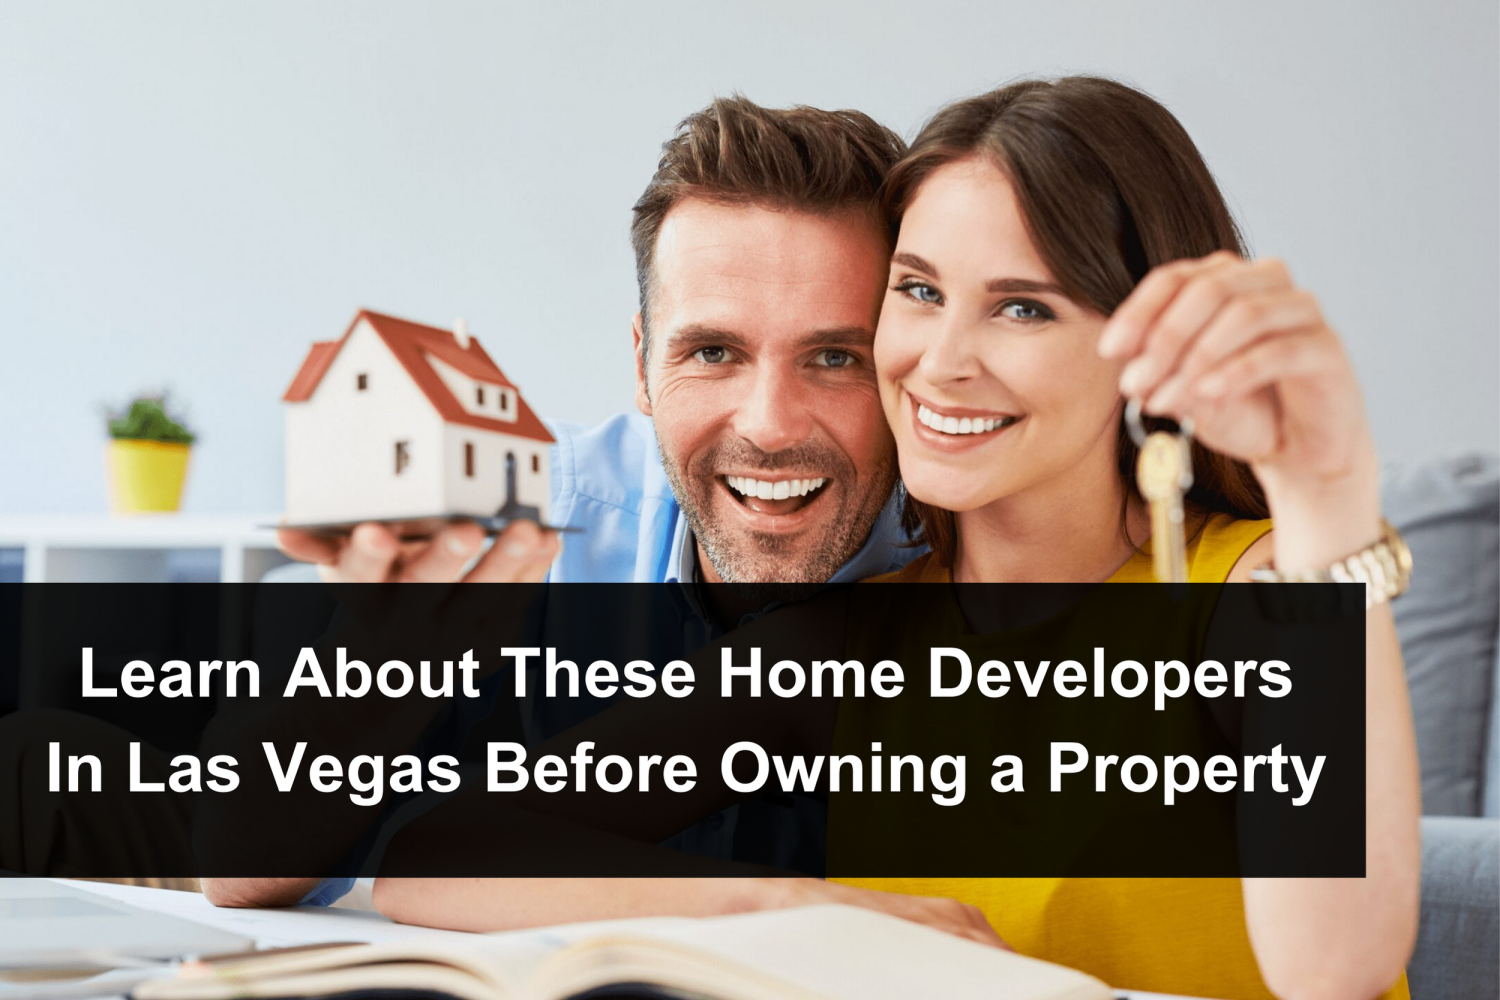 Home Developers In Las Vegas